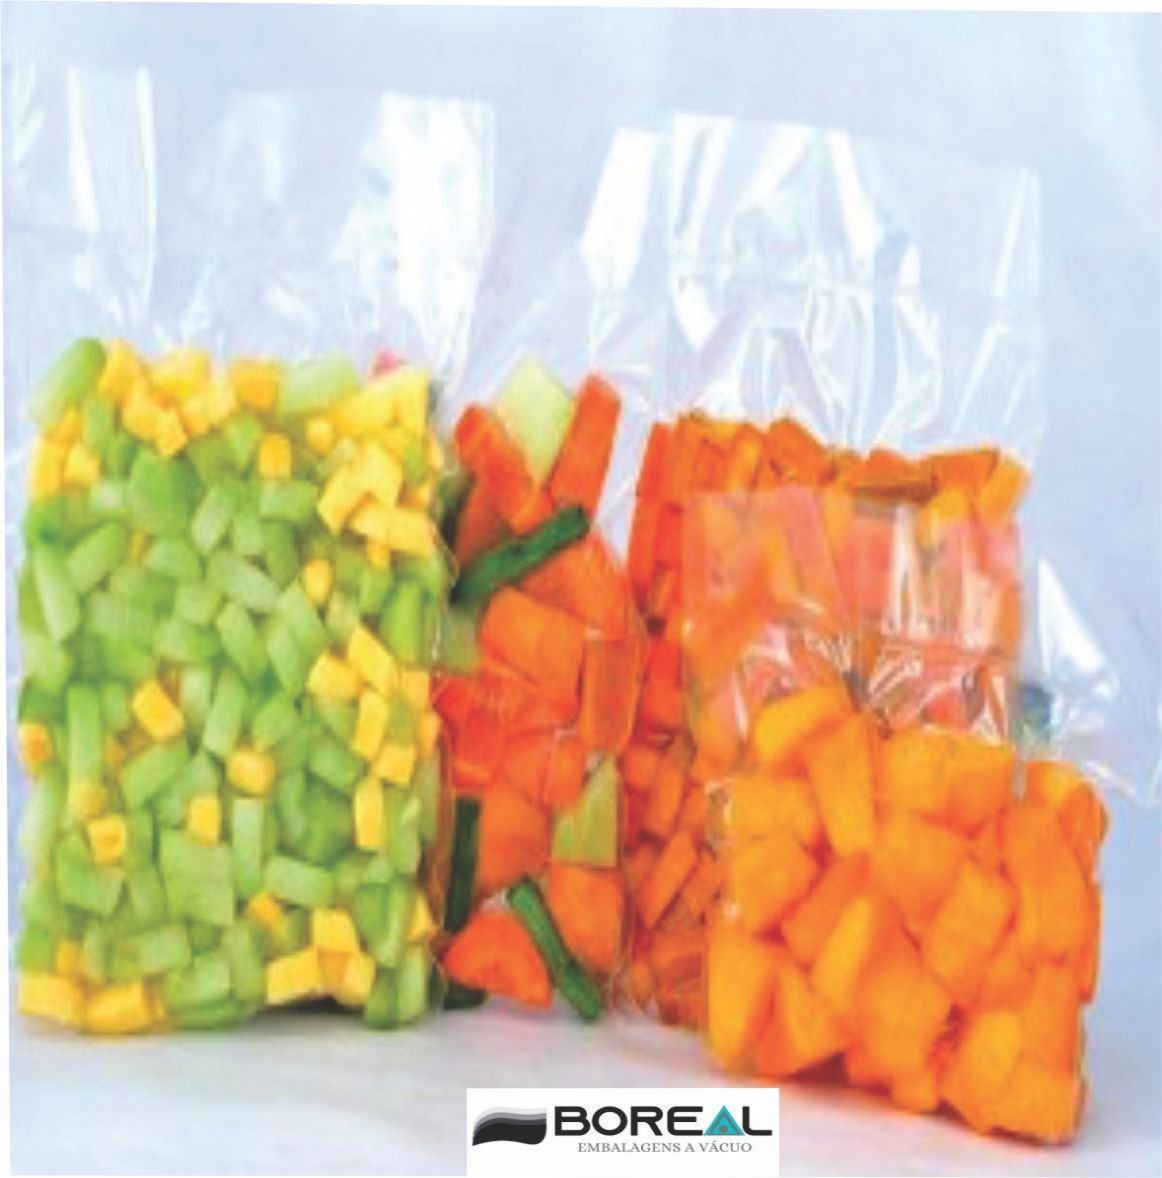 Saco de Embalagem a Vácuo Nylon Poli 20x30 10 Micras - Kits Boreal Embalagens a Vácuo Embalagem a Vá - 8